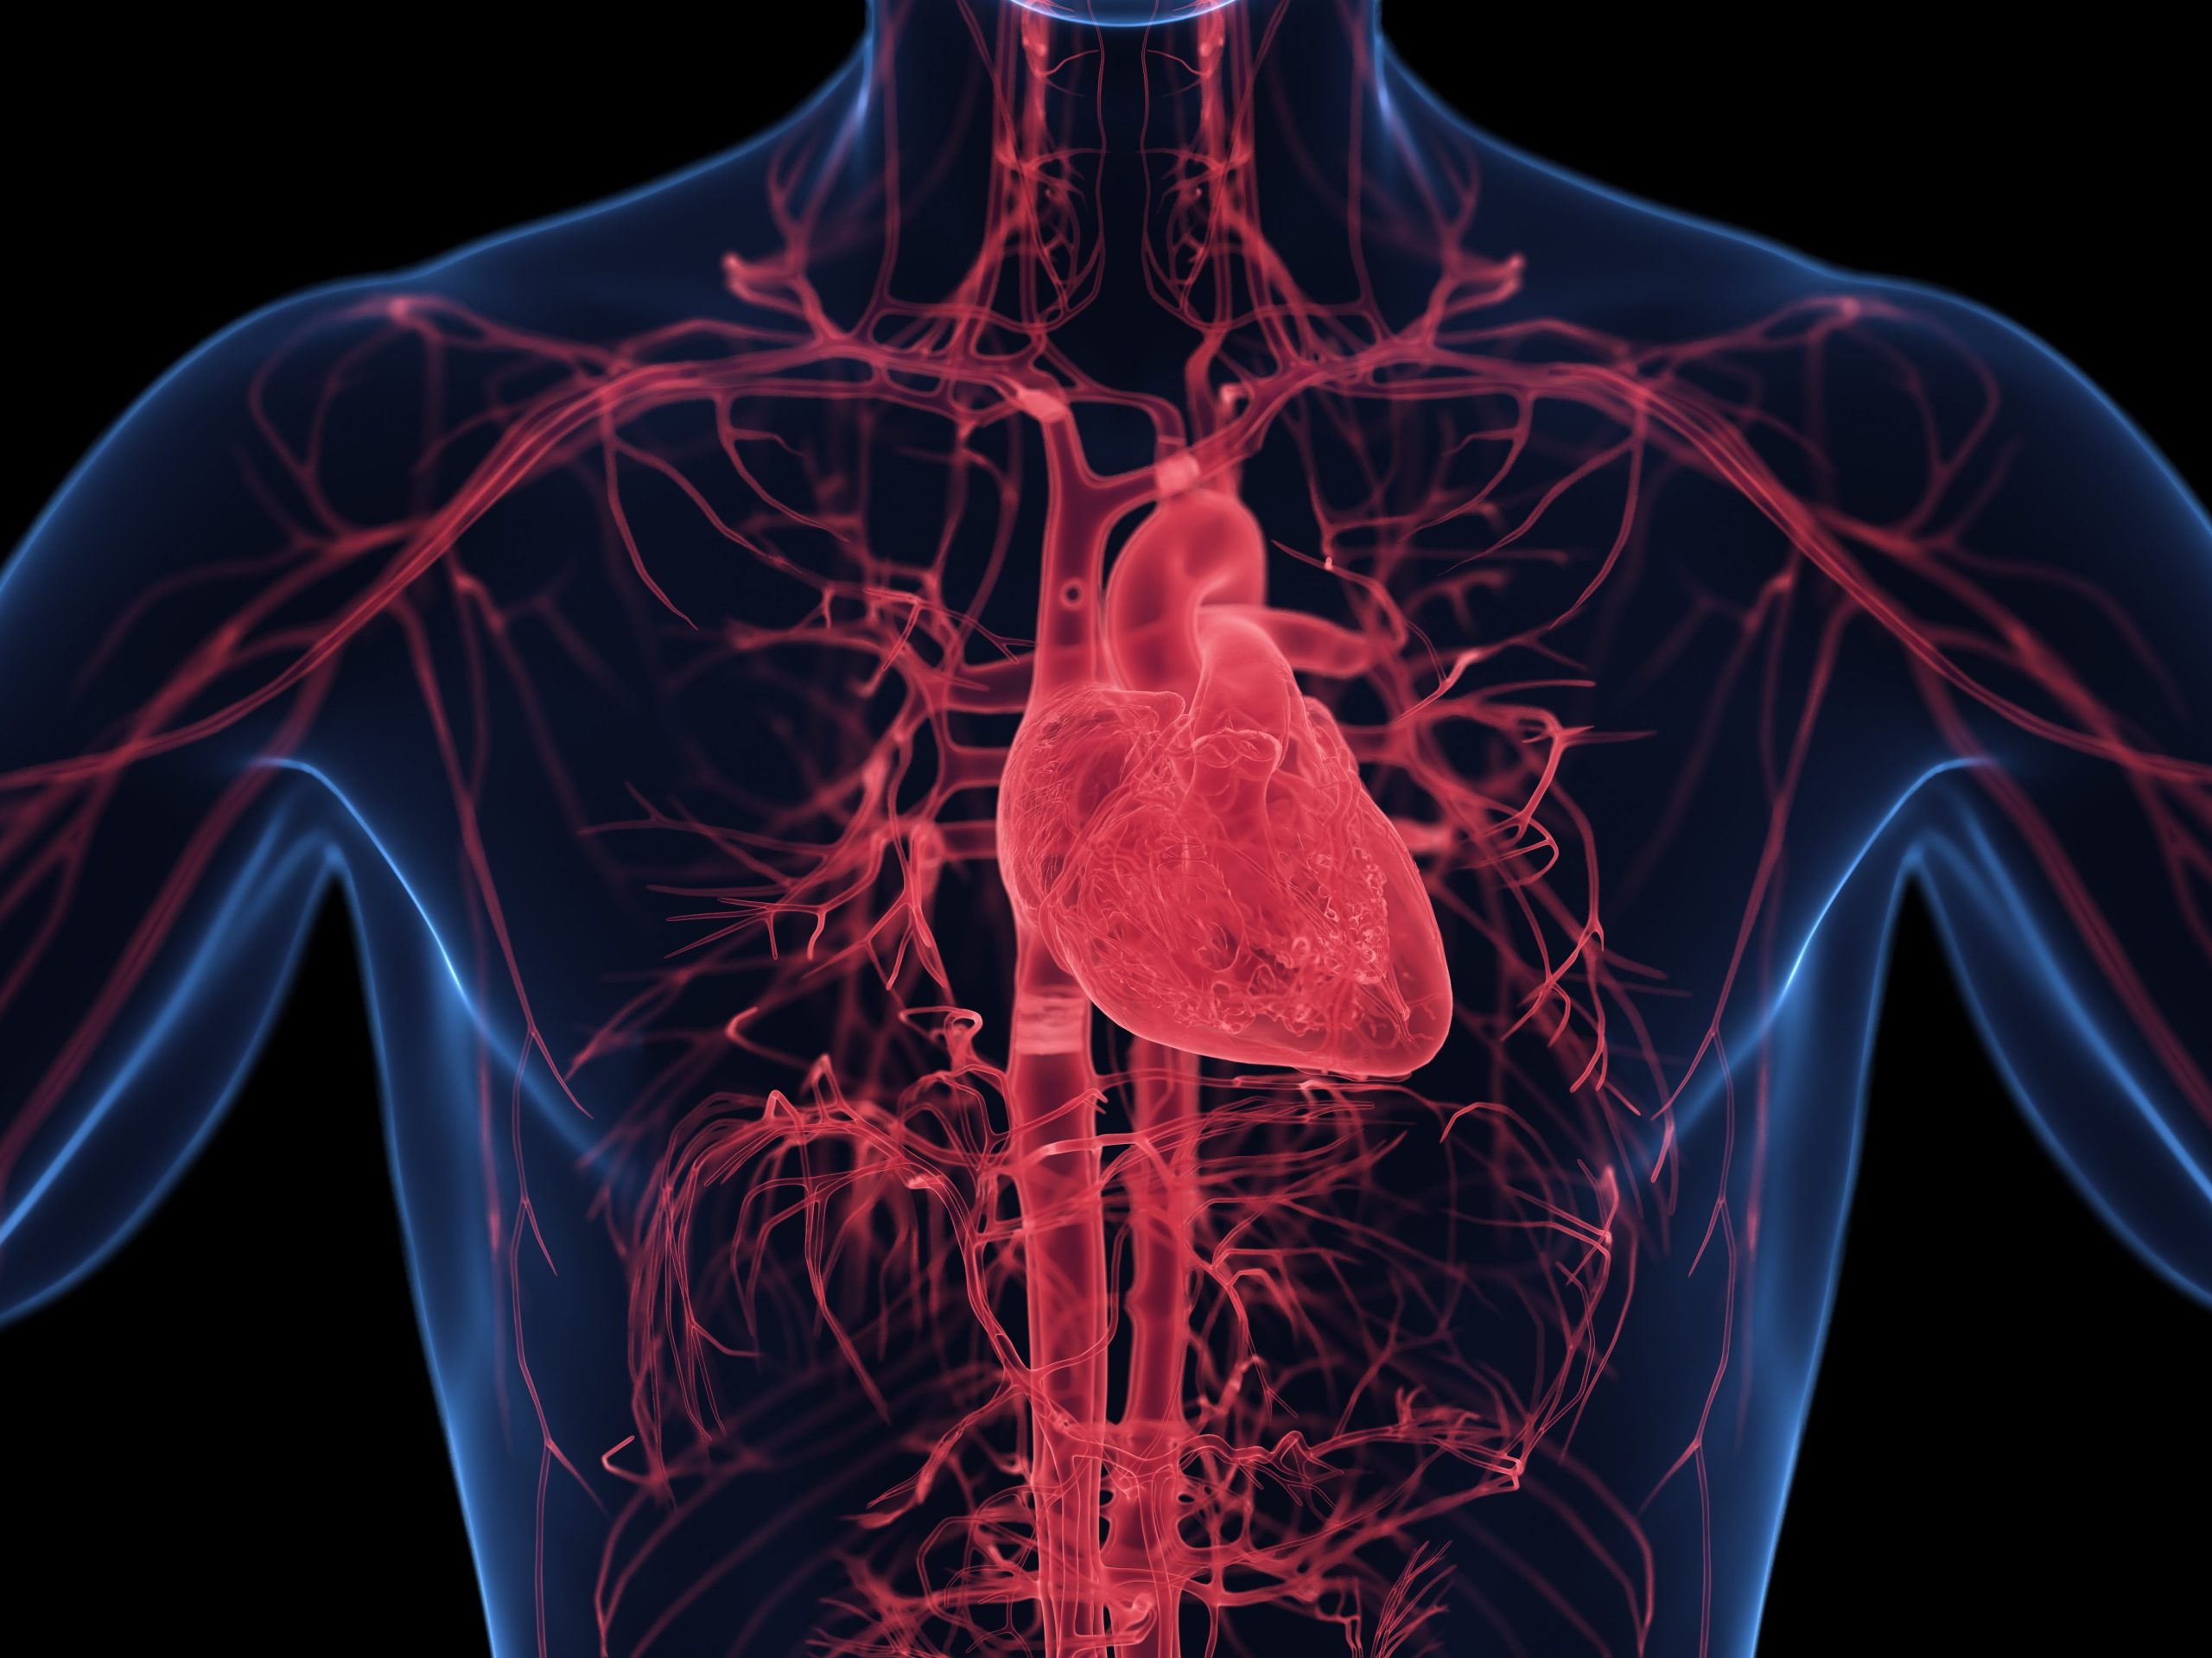 3d rendered medical illustration of male anatomy - cardiovascular system. plain black background. professional studio lighting.